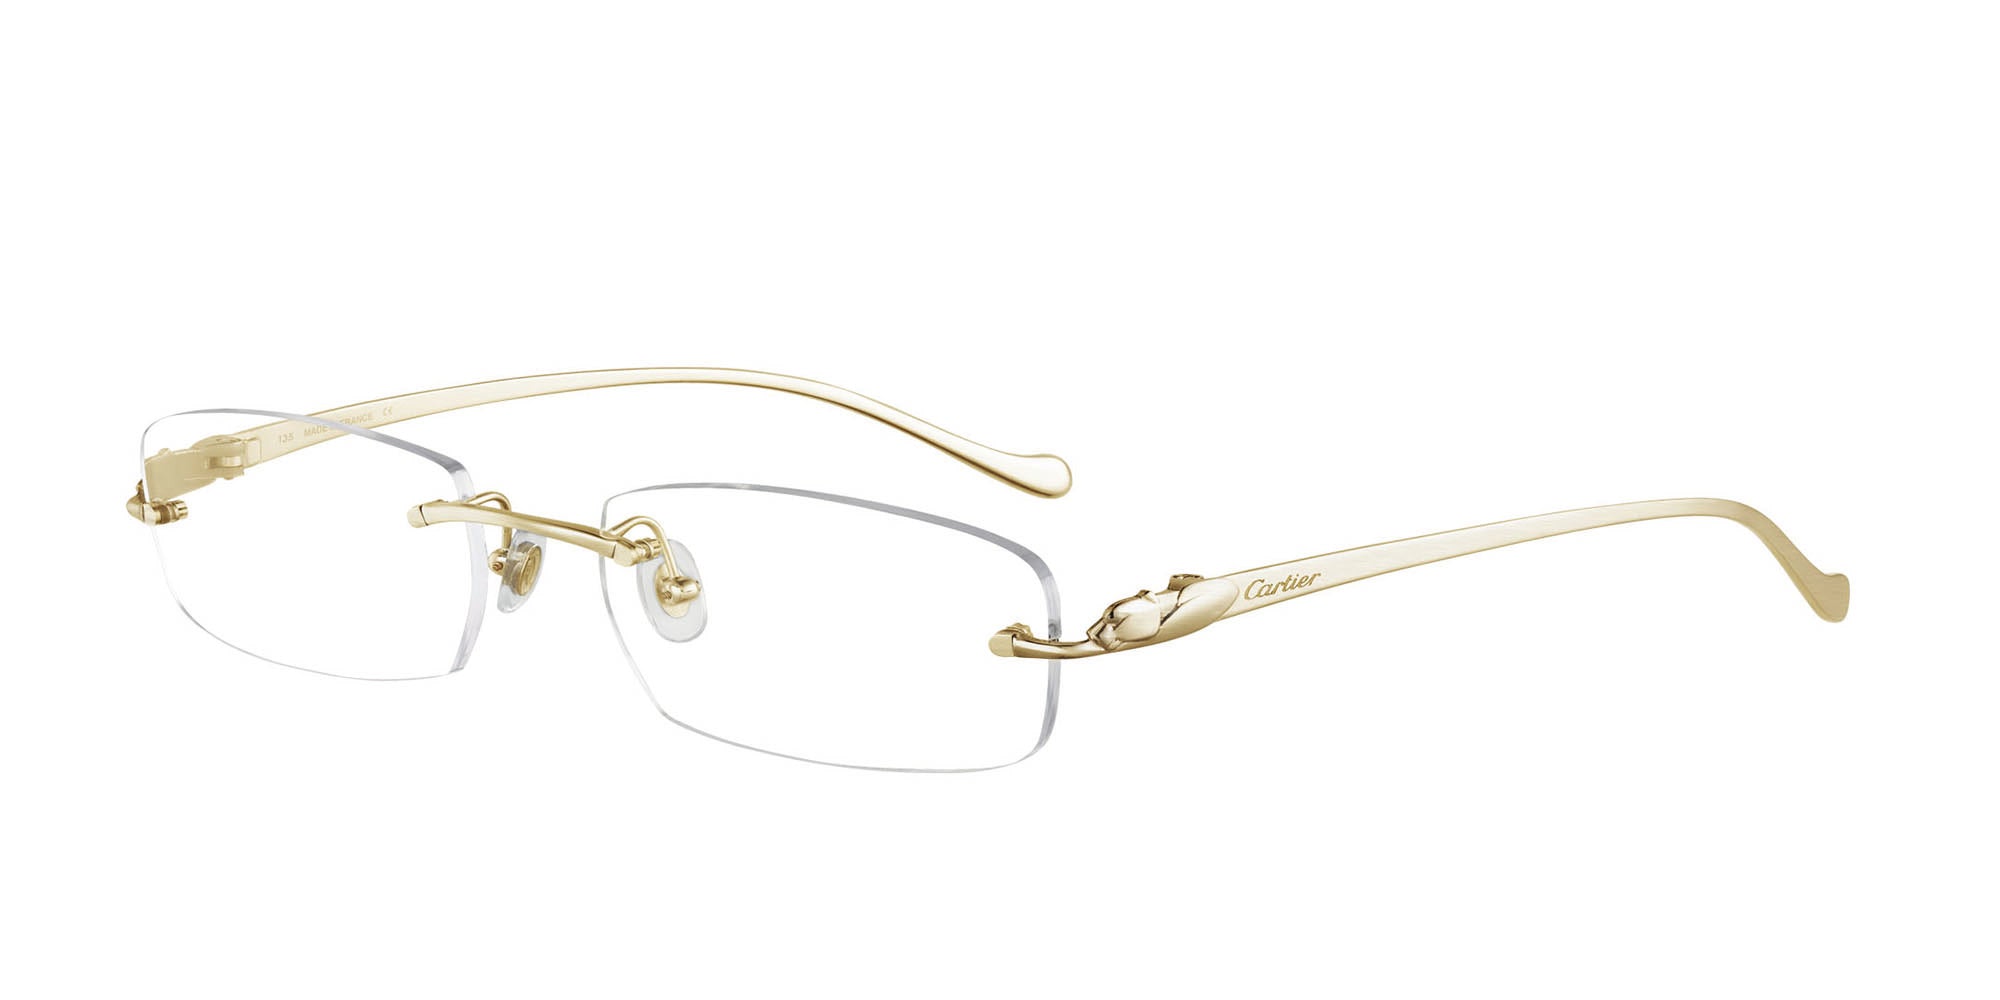 Signature C De Cartier Square Glasses in Black - Cartier Eyewear Collection